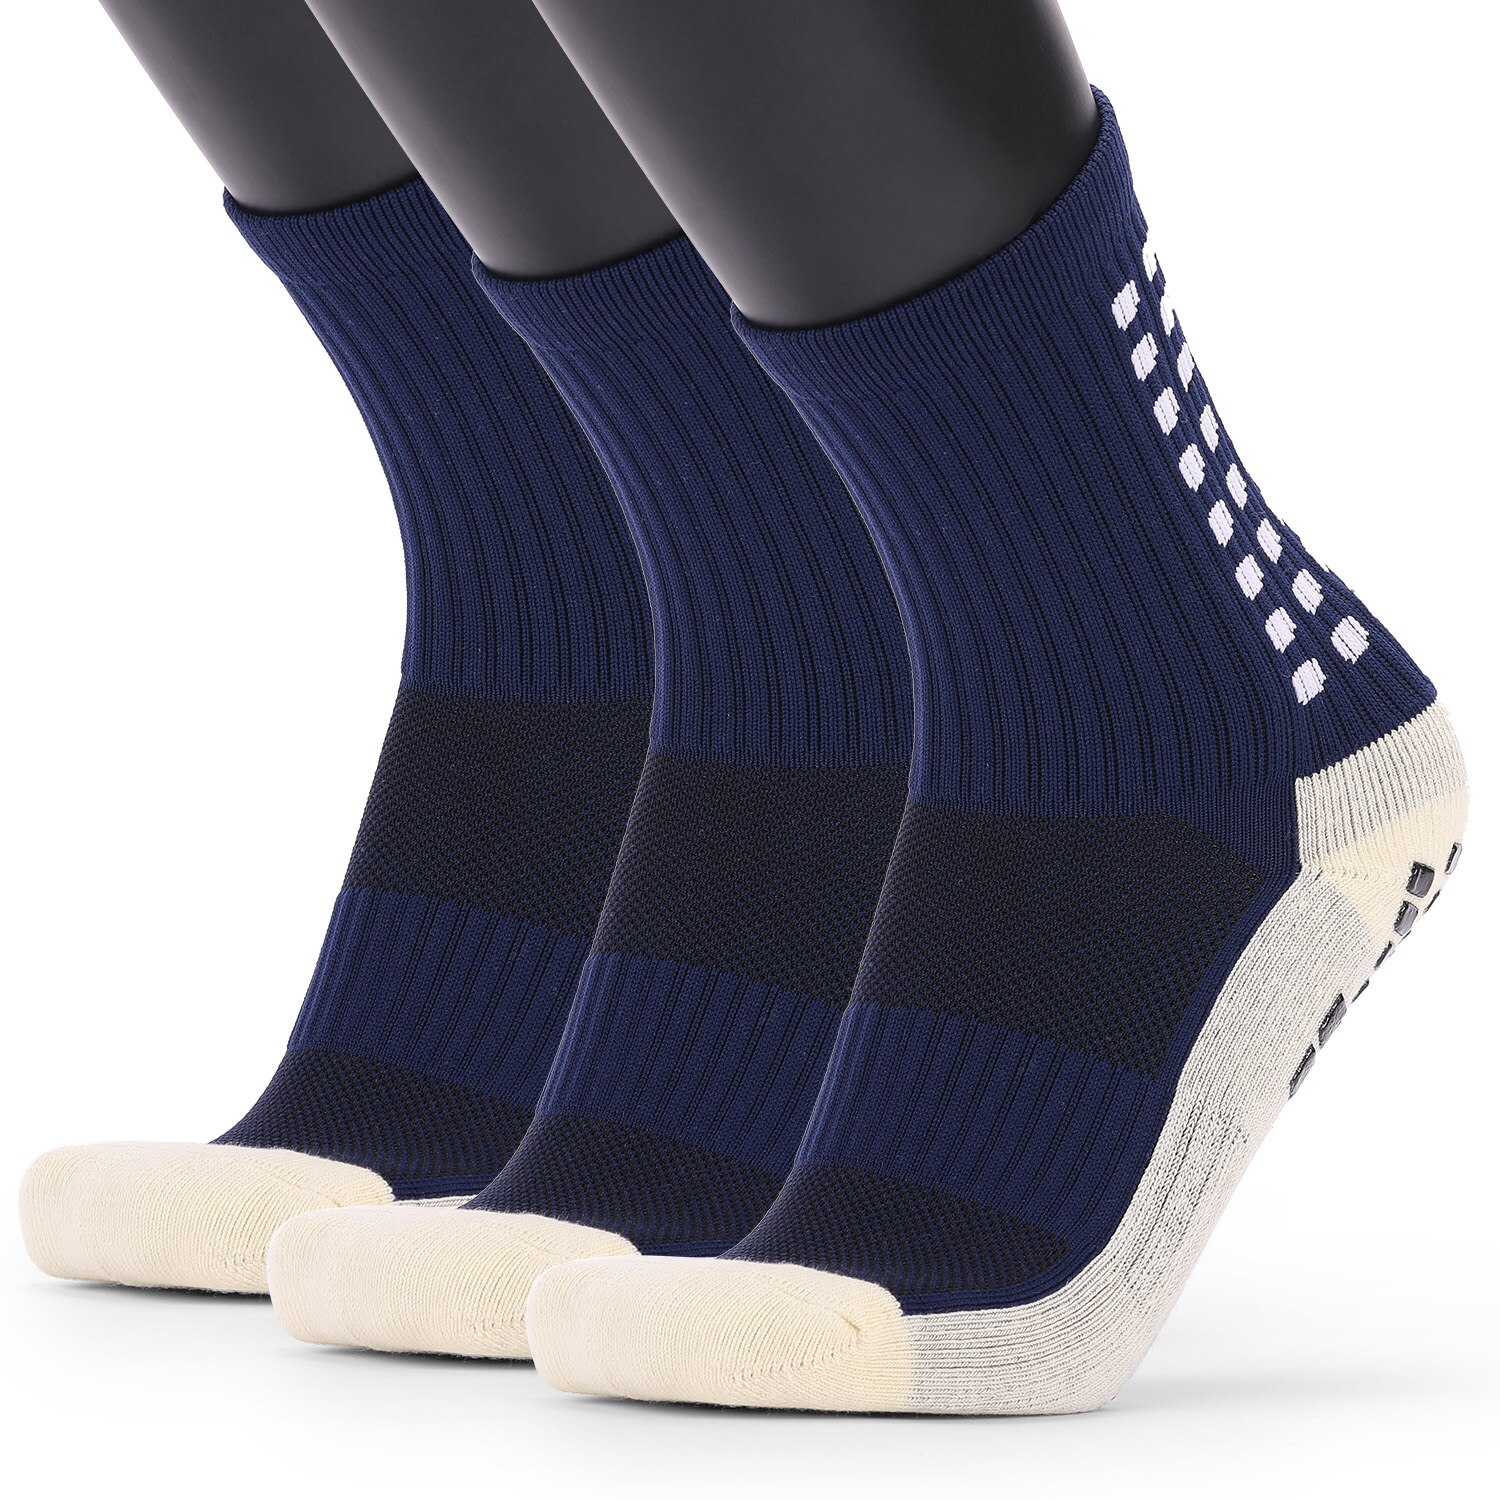 3/1pairs Men's Anti Slip Football Socks Athletic Long Socks Absorbent